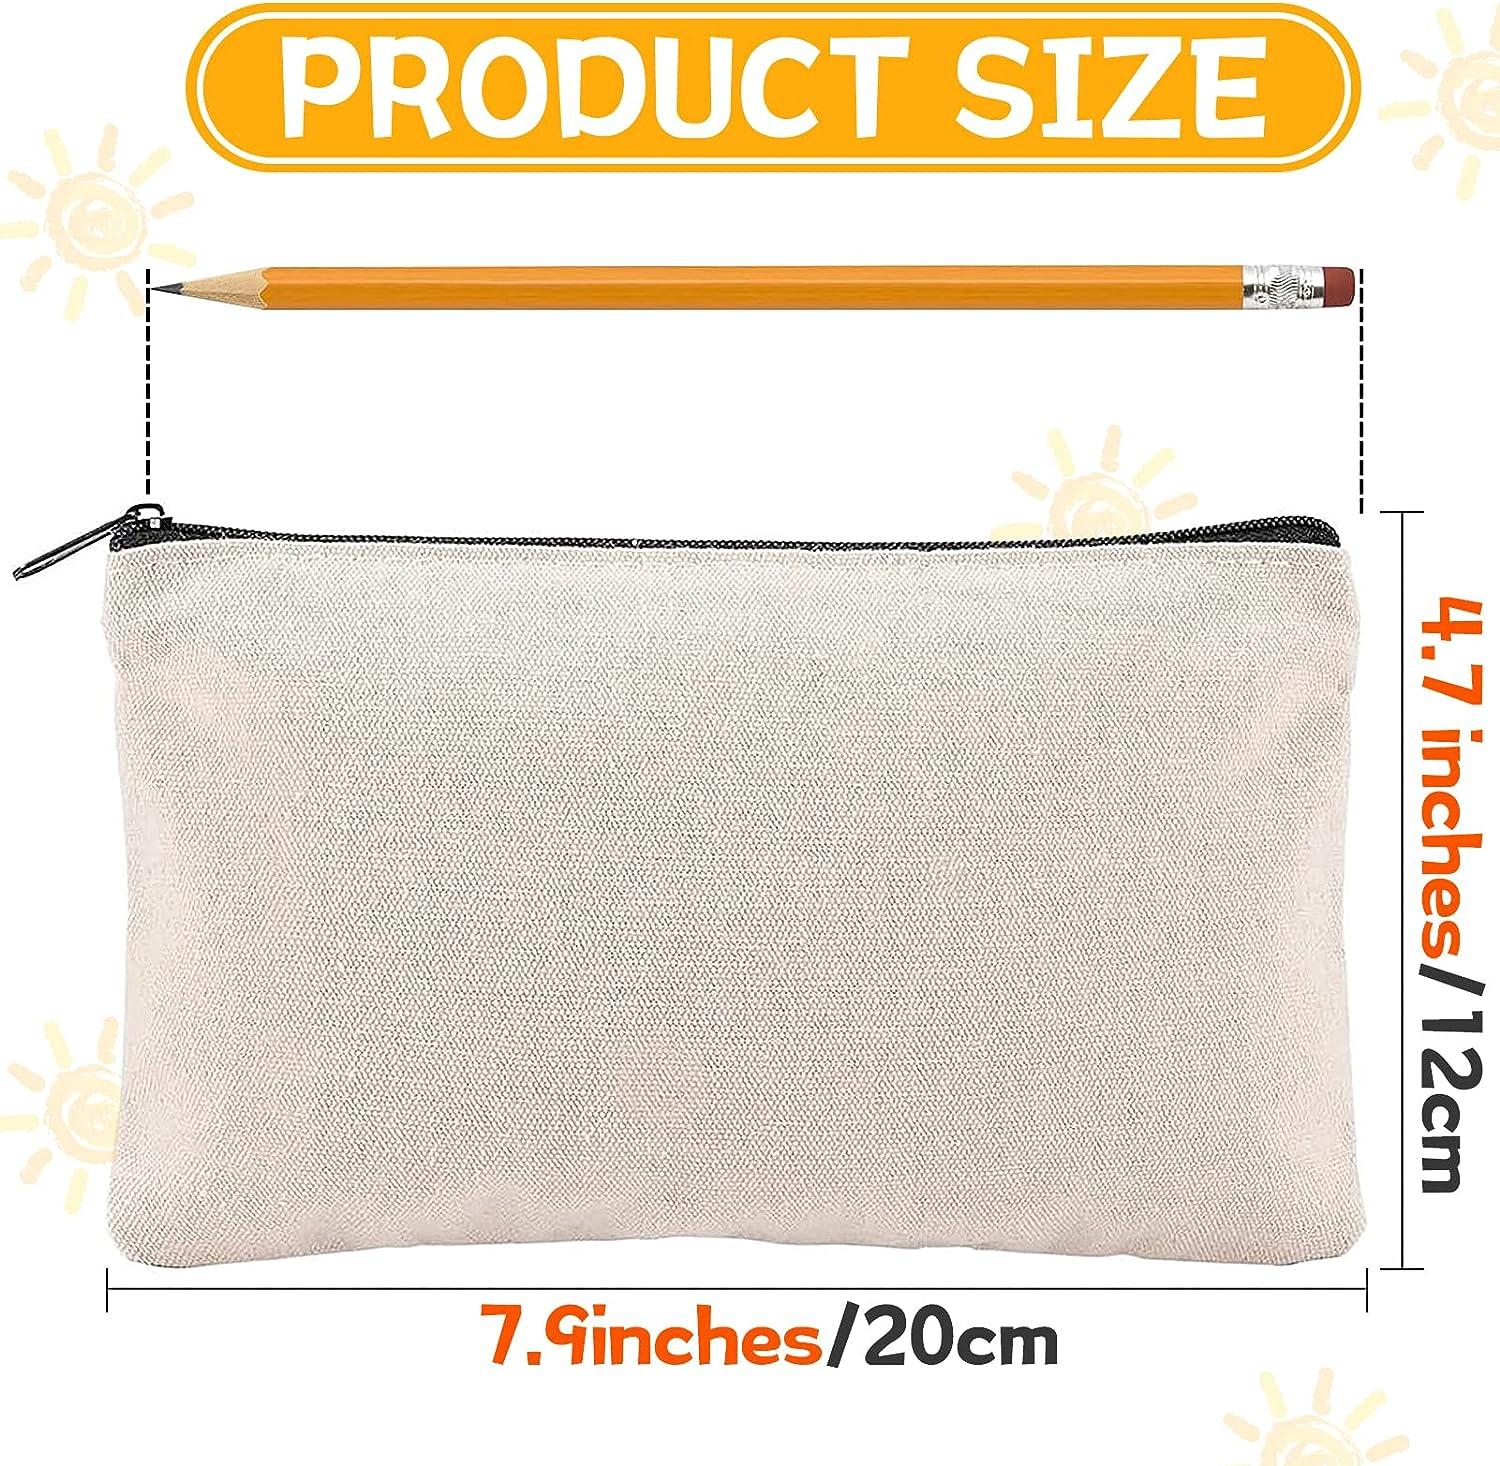  Cruleen 40 Pcs 8.3 X 4.7 Inch Blank DIY Craft Bag Canvas  Zipper Pouch - Cotton Invoice Bill Zipper Bag Cosmetic Bag & Makeup Bag  Multi-Purpose Travel Toiletry Bag Canvas Pouch